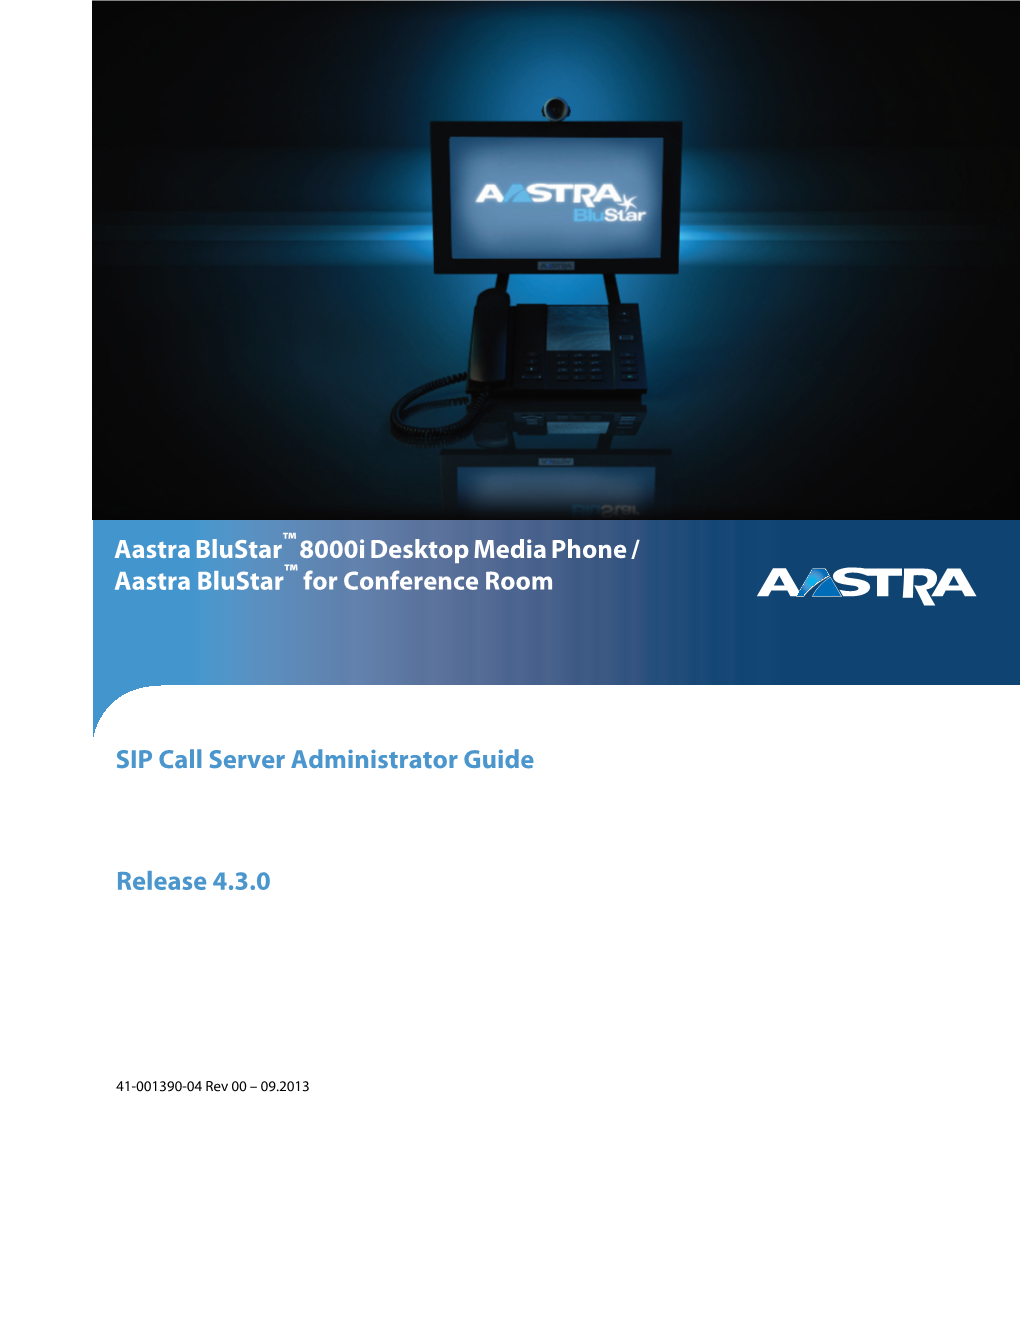 Aastra Blustar 8000I and Blustar for Conference Room Admin Guide